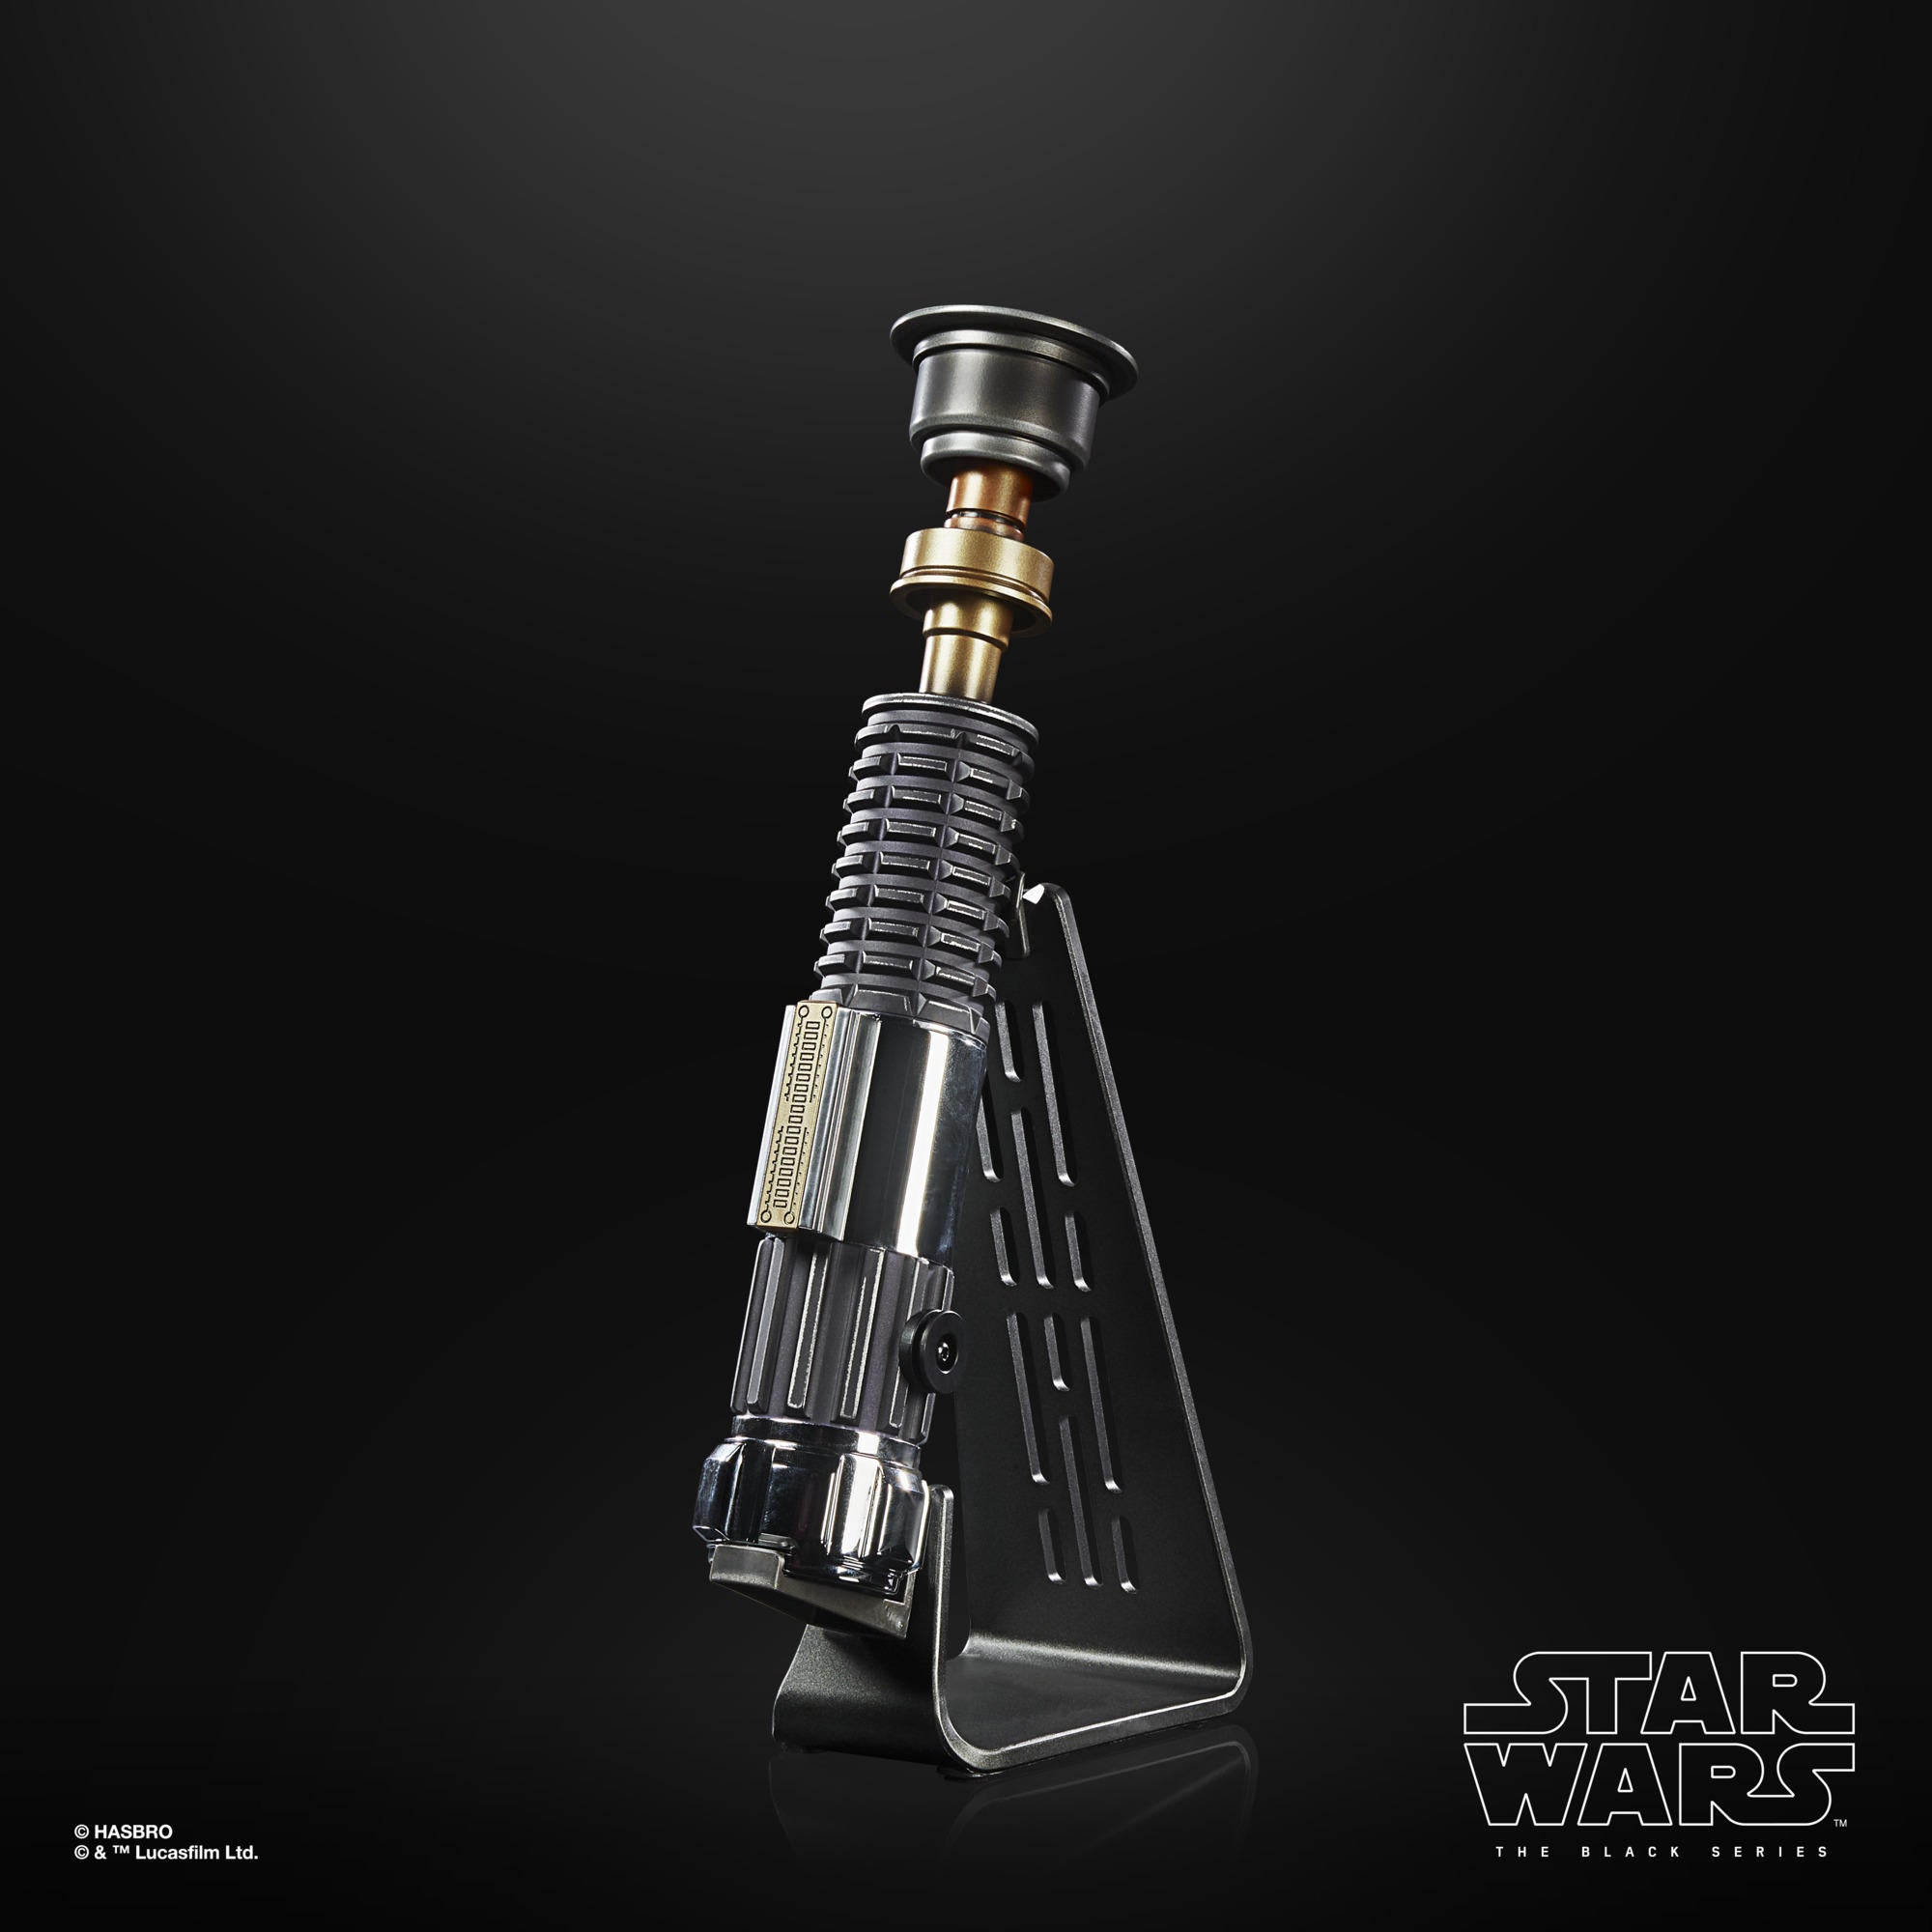 Star Wars Obi-Wan Kenobi Black Series Force FX Lightsaber Is Shipping Now